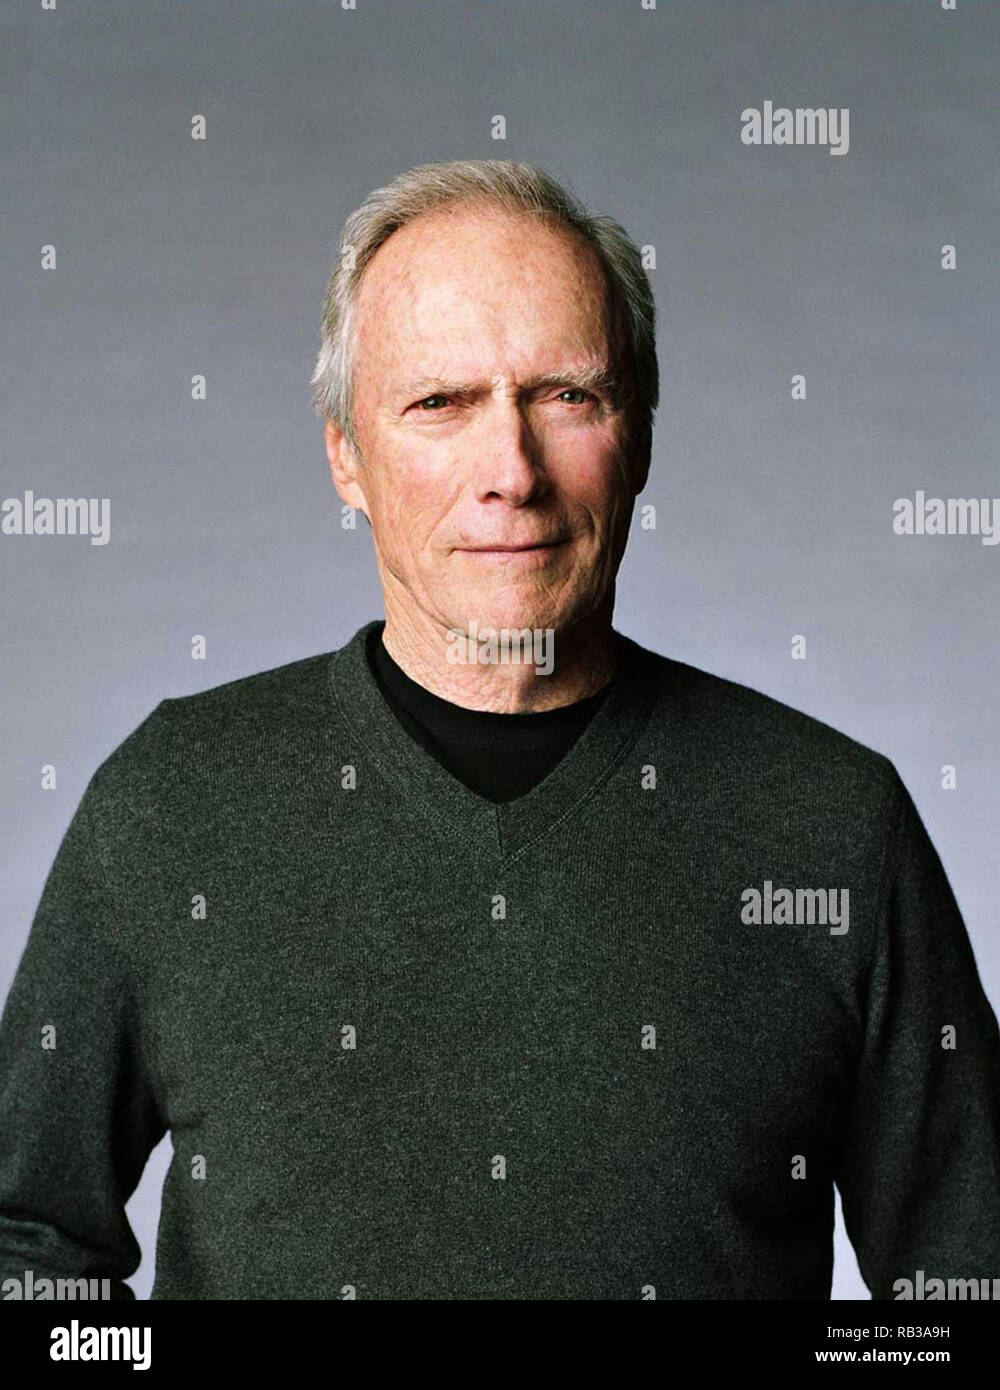 Original Film Titel: Jenseits. Englischer Titel: Jenseits. Jahr: 2010. Regie: Clint Eastwood. Stars: Clint Eastwood. Credit: MALPASO PRODUCTIONS/Album Stockfoto